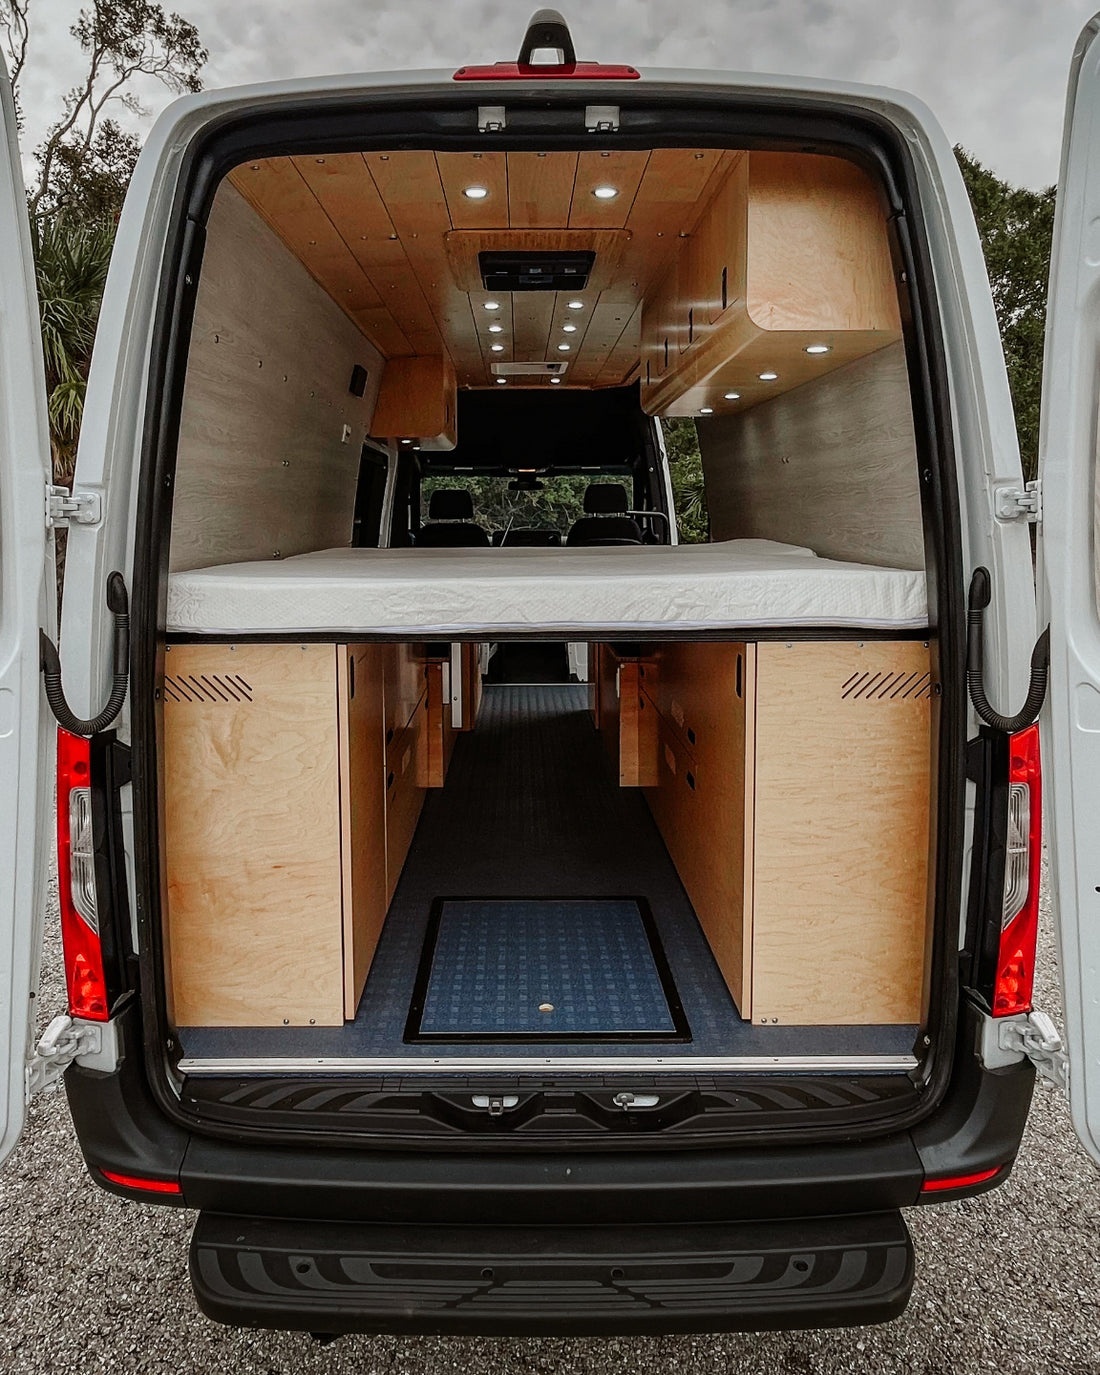 "Compact Comfort: DIY Van Conversion Tips for Maximizing Small Spaces"